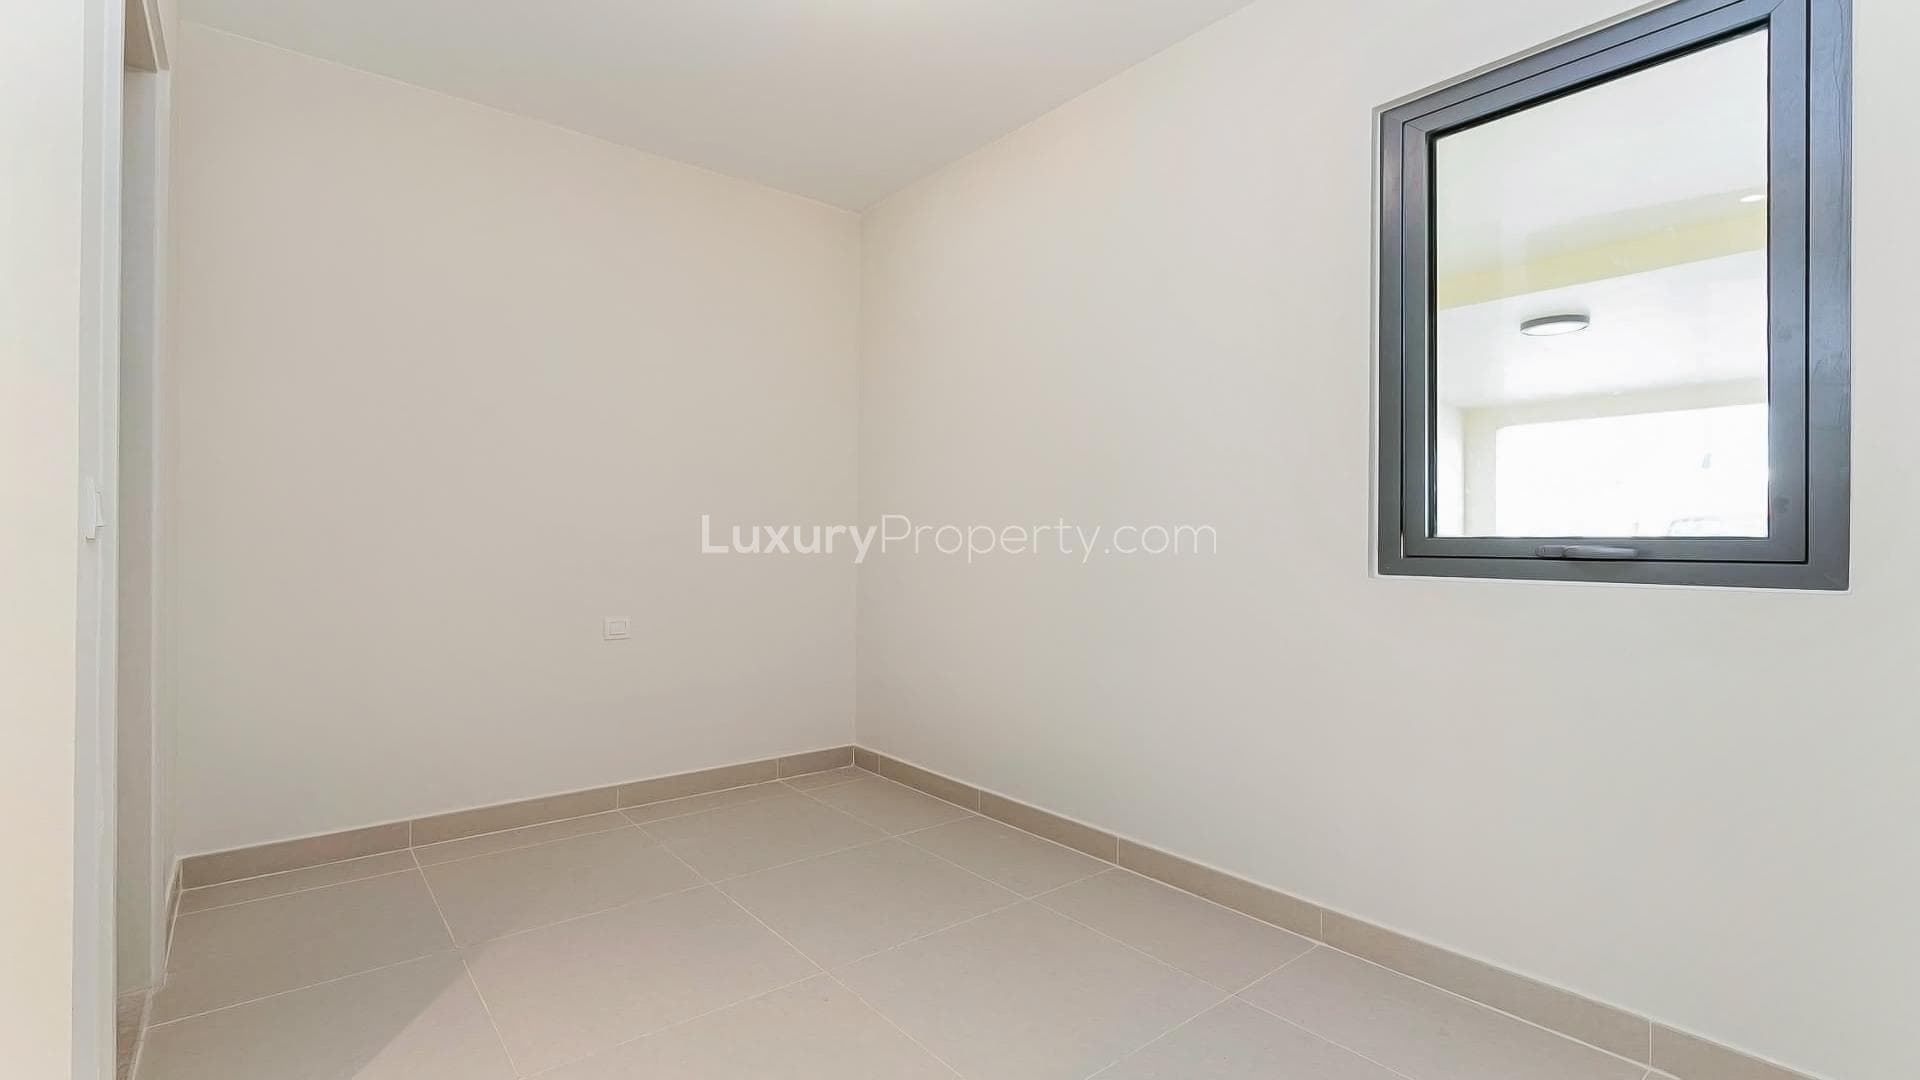 3 Bedroom Villa For Sale Maple At Dubai Hills Estate Lp18588 931f450bc546f80.jpg